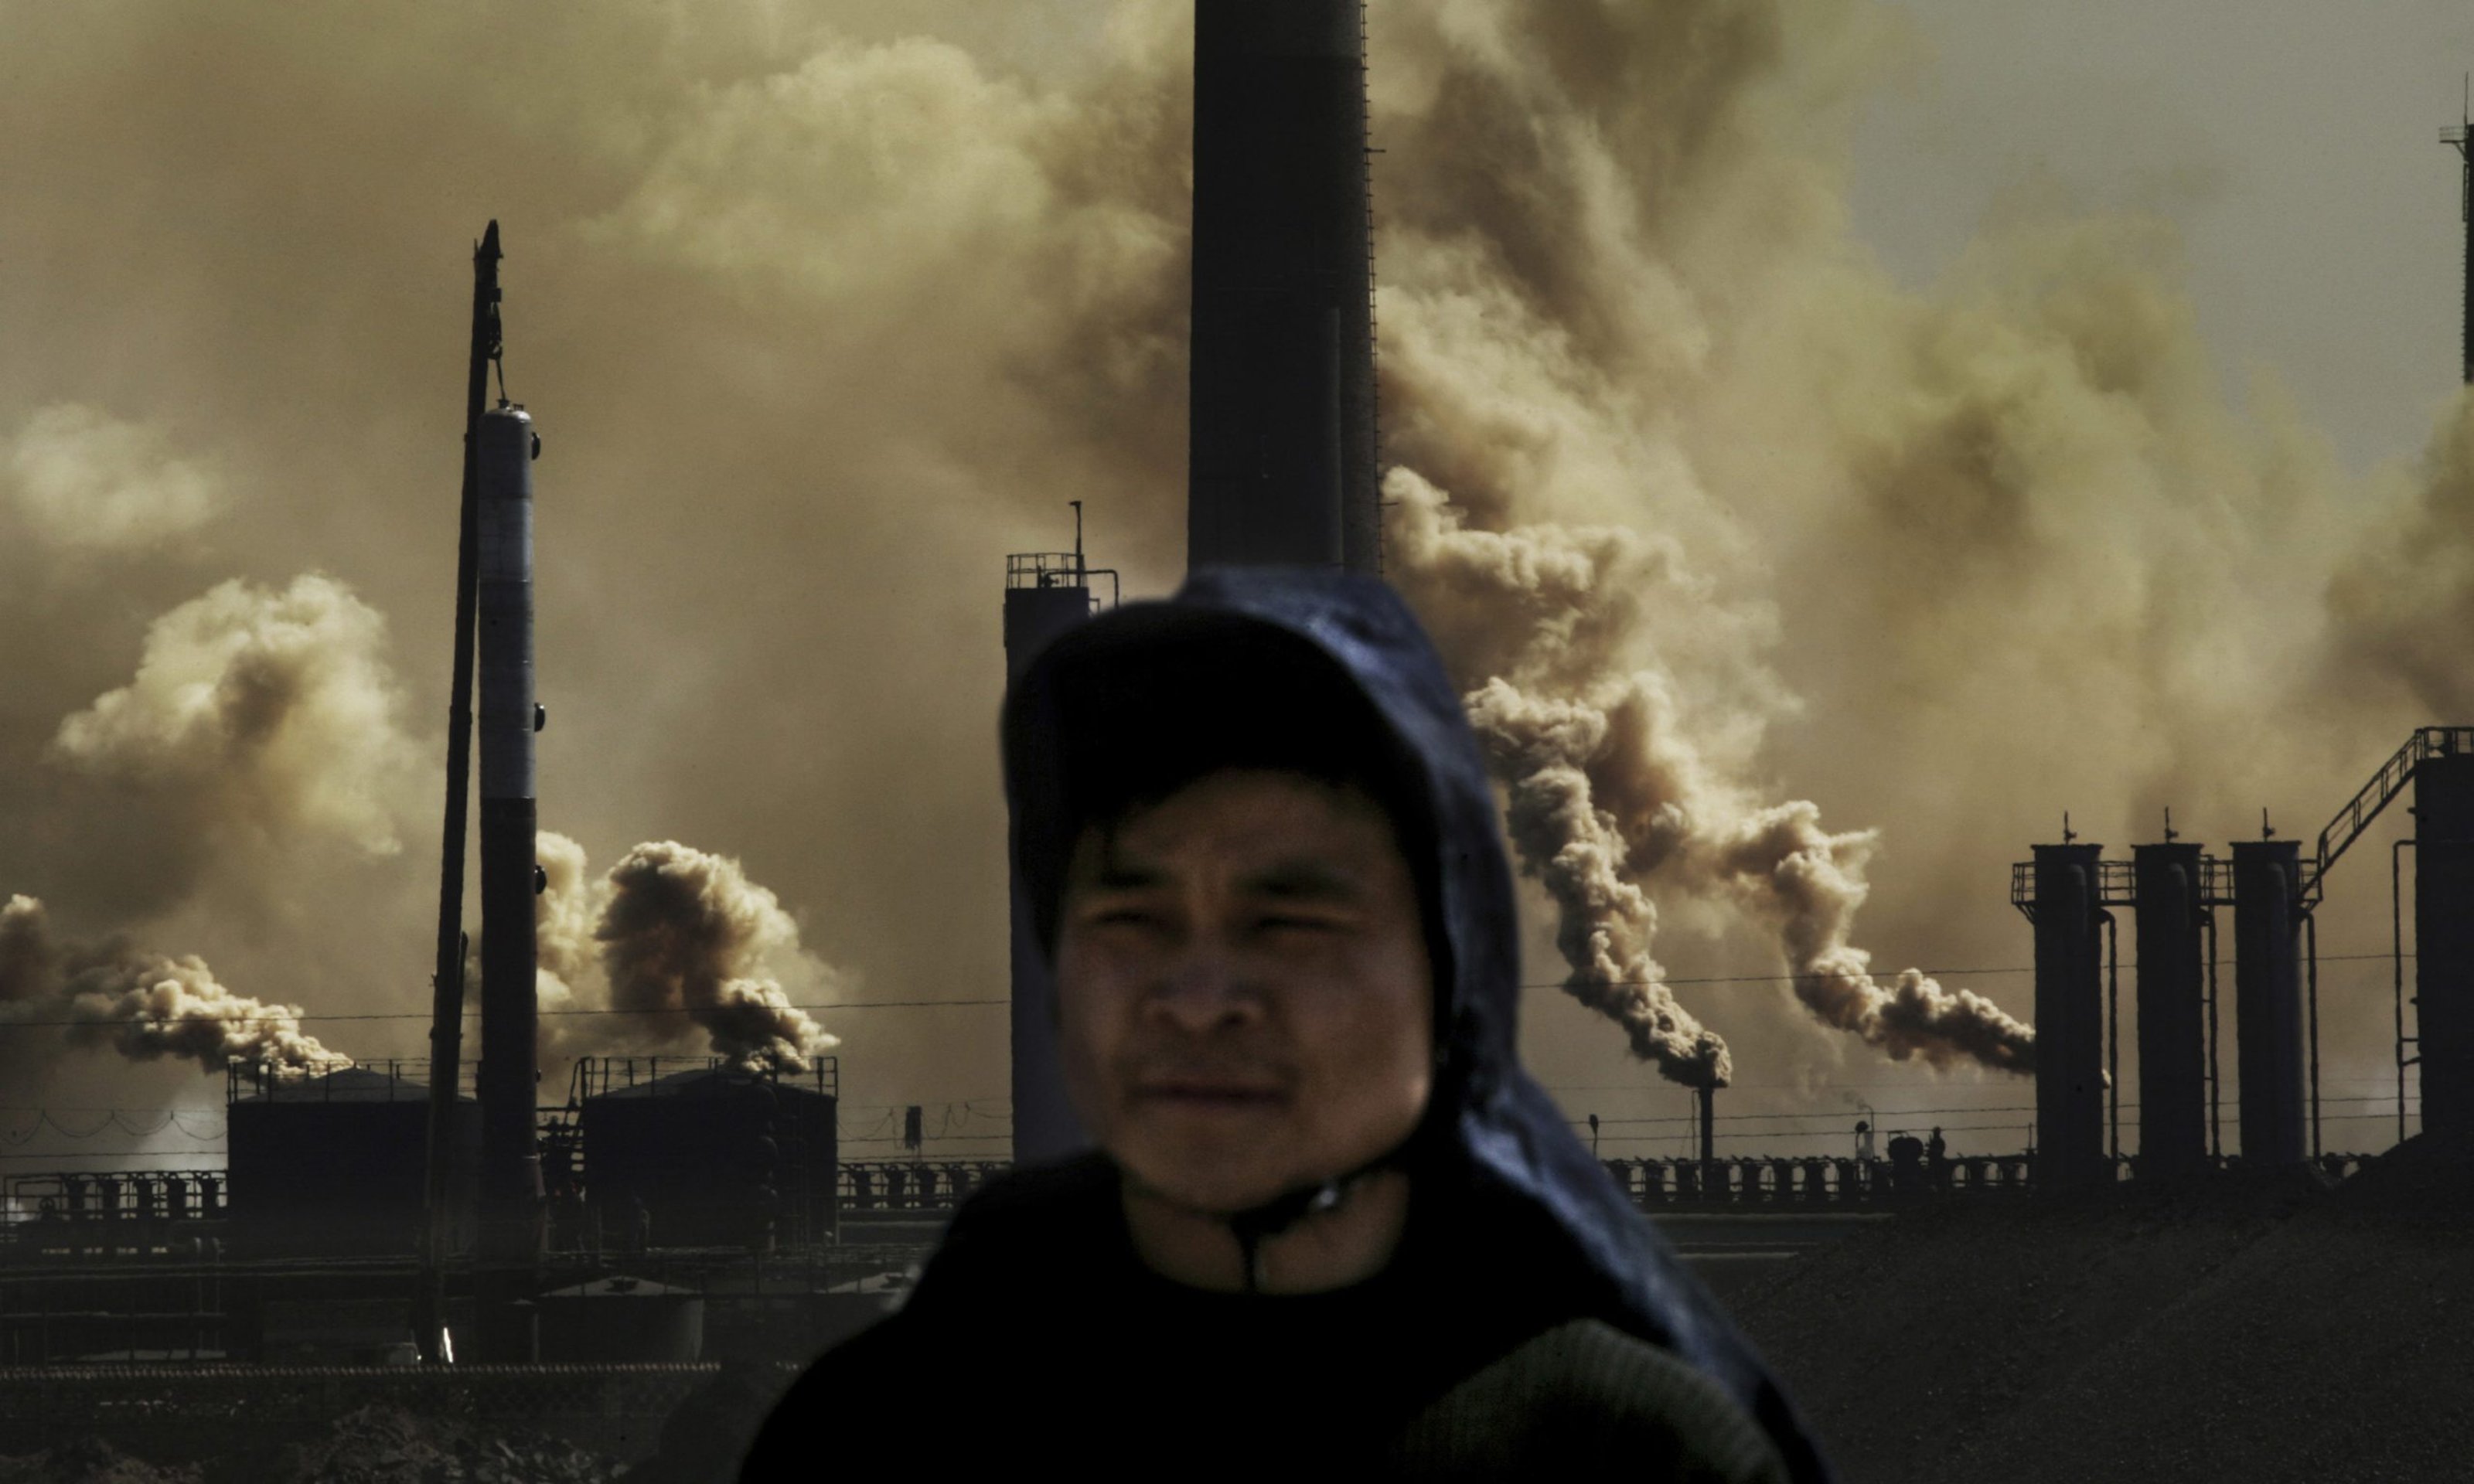 worker standing in front of factory releasing heavy fumes